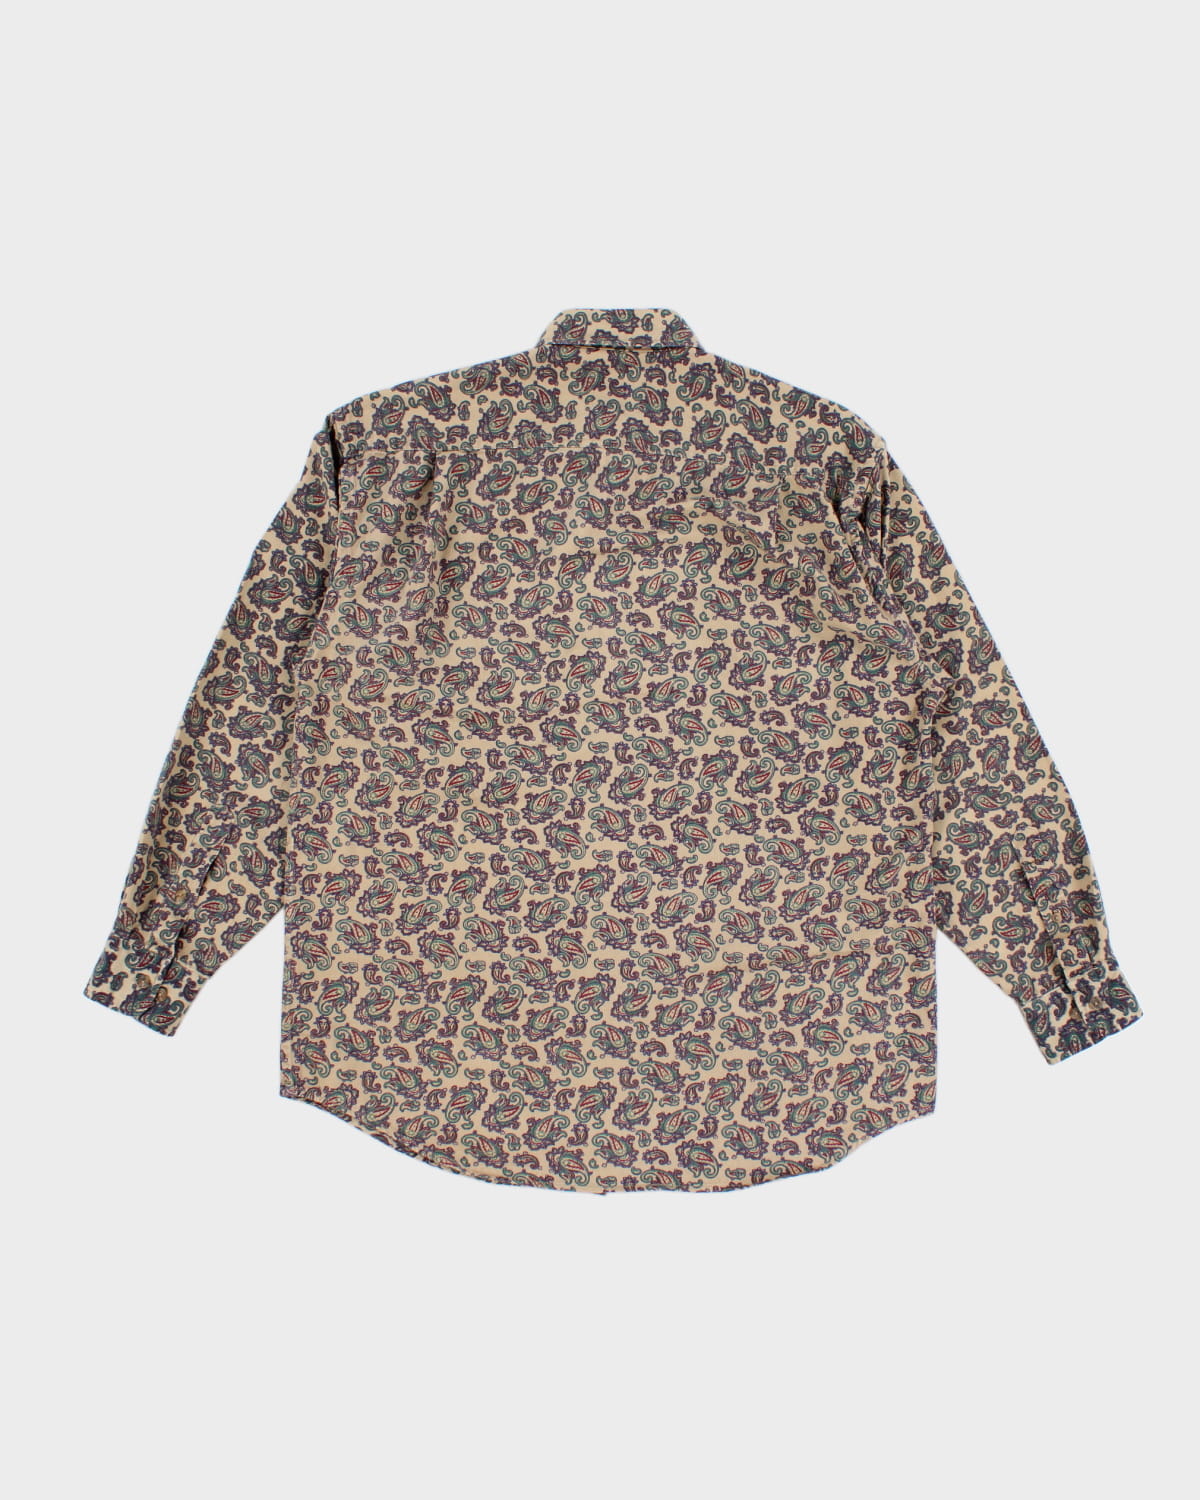 70's Patterned Cotton Shirt - M